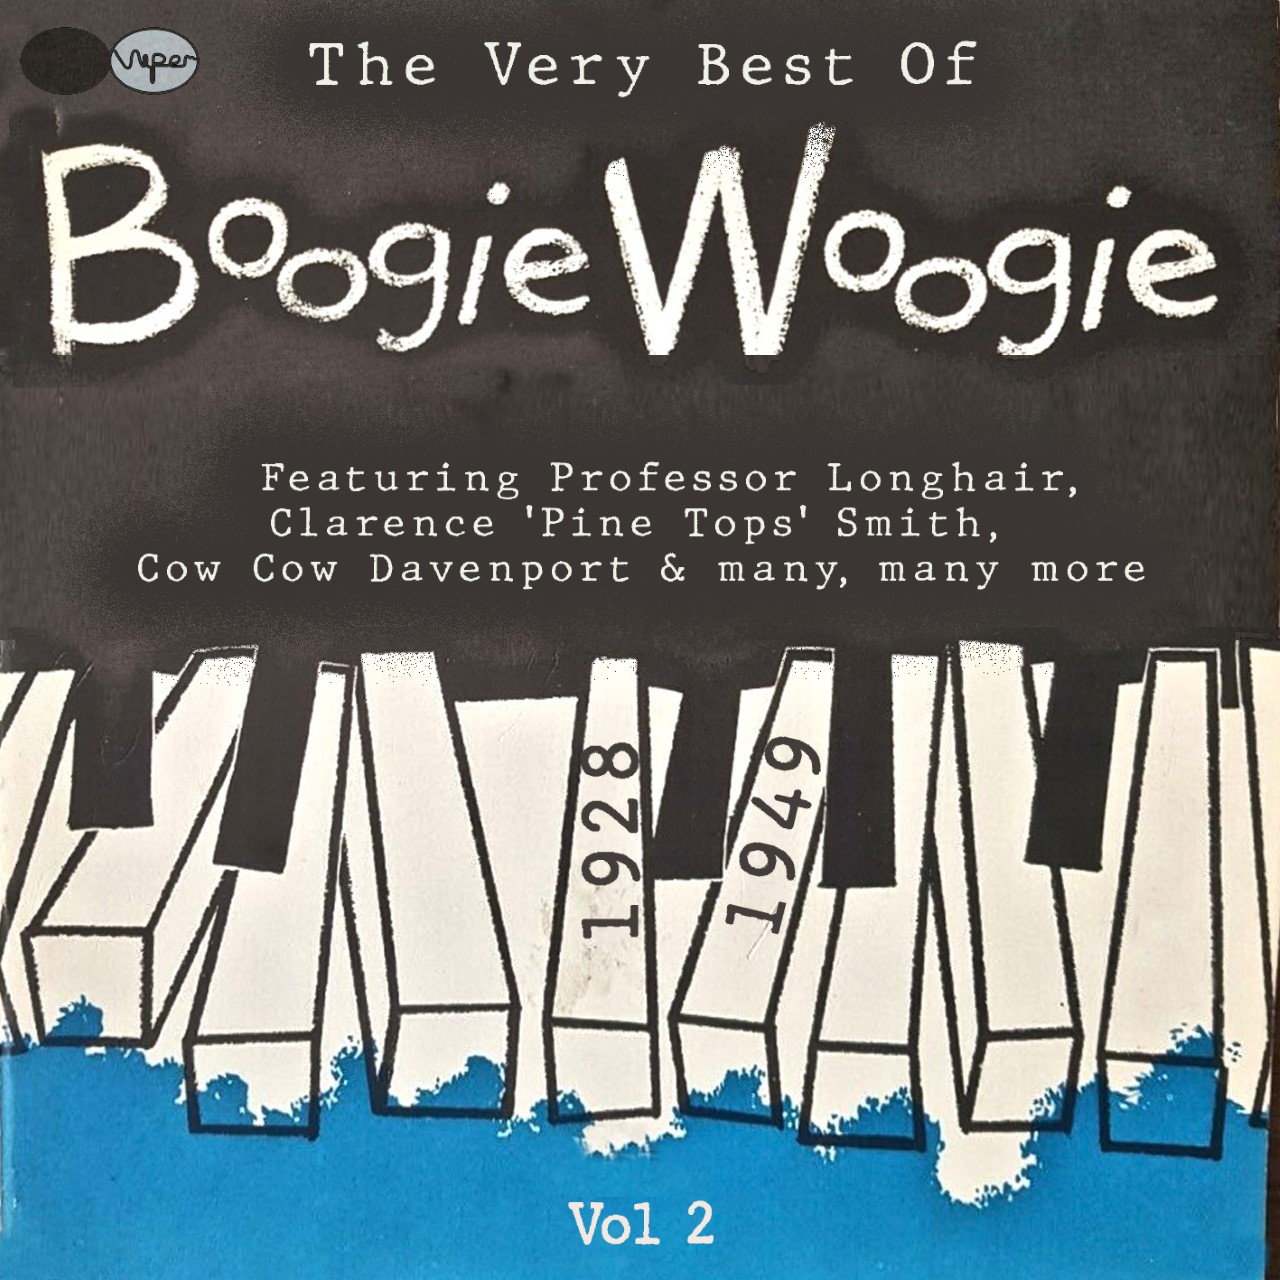 The Very Best of Boogie Woogie Vol 2 1928- 1949 – Viper DL152